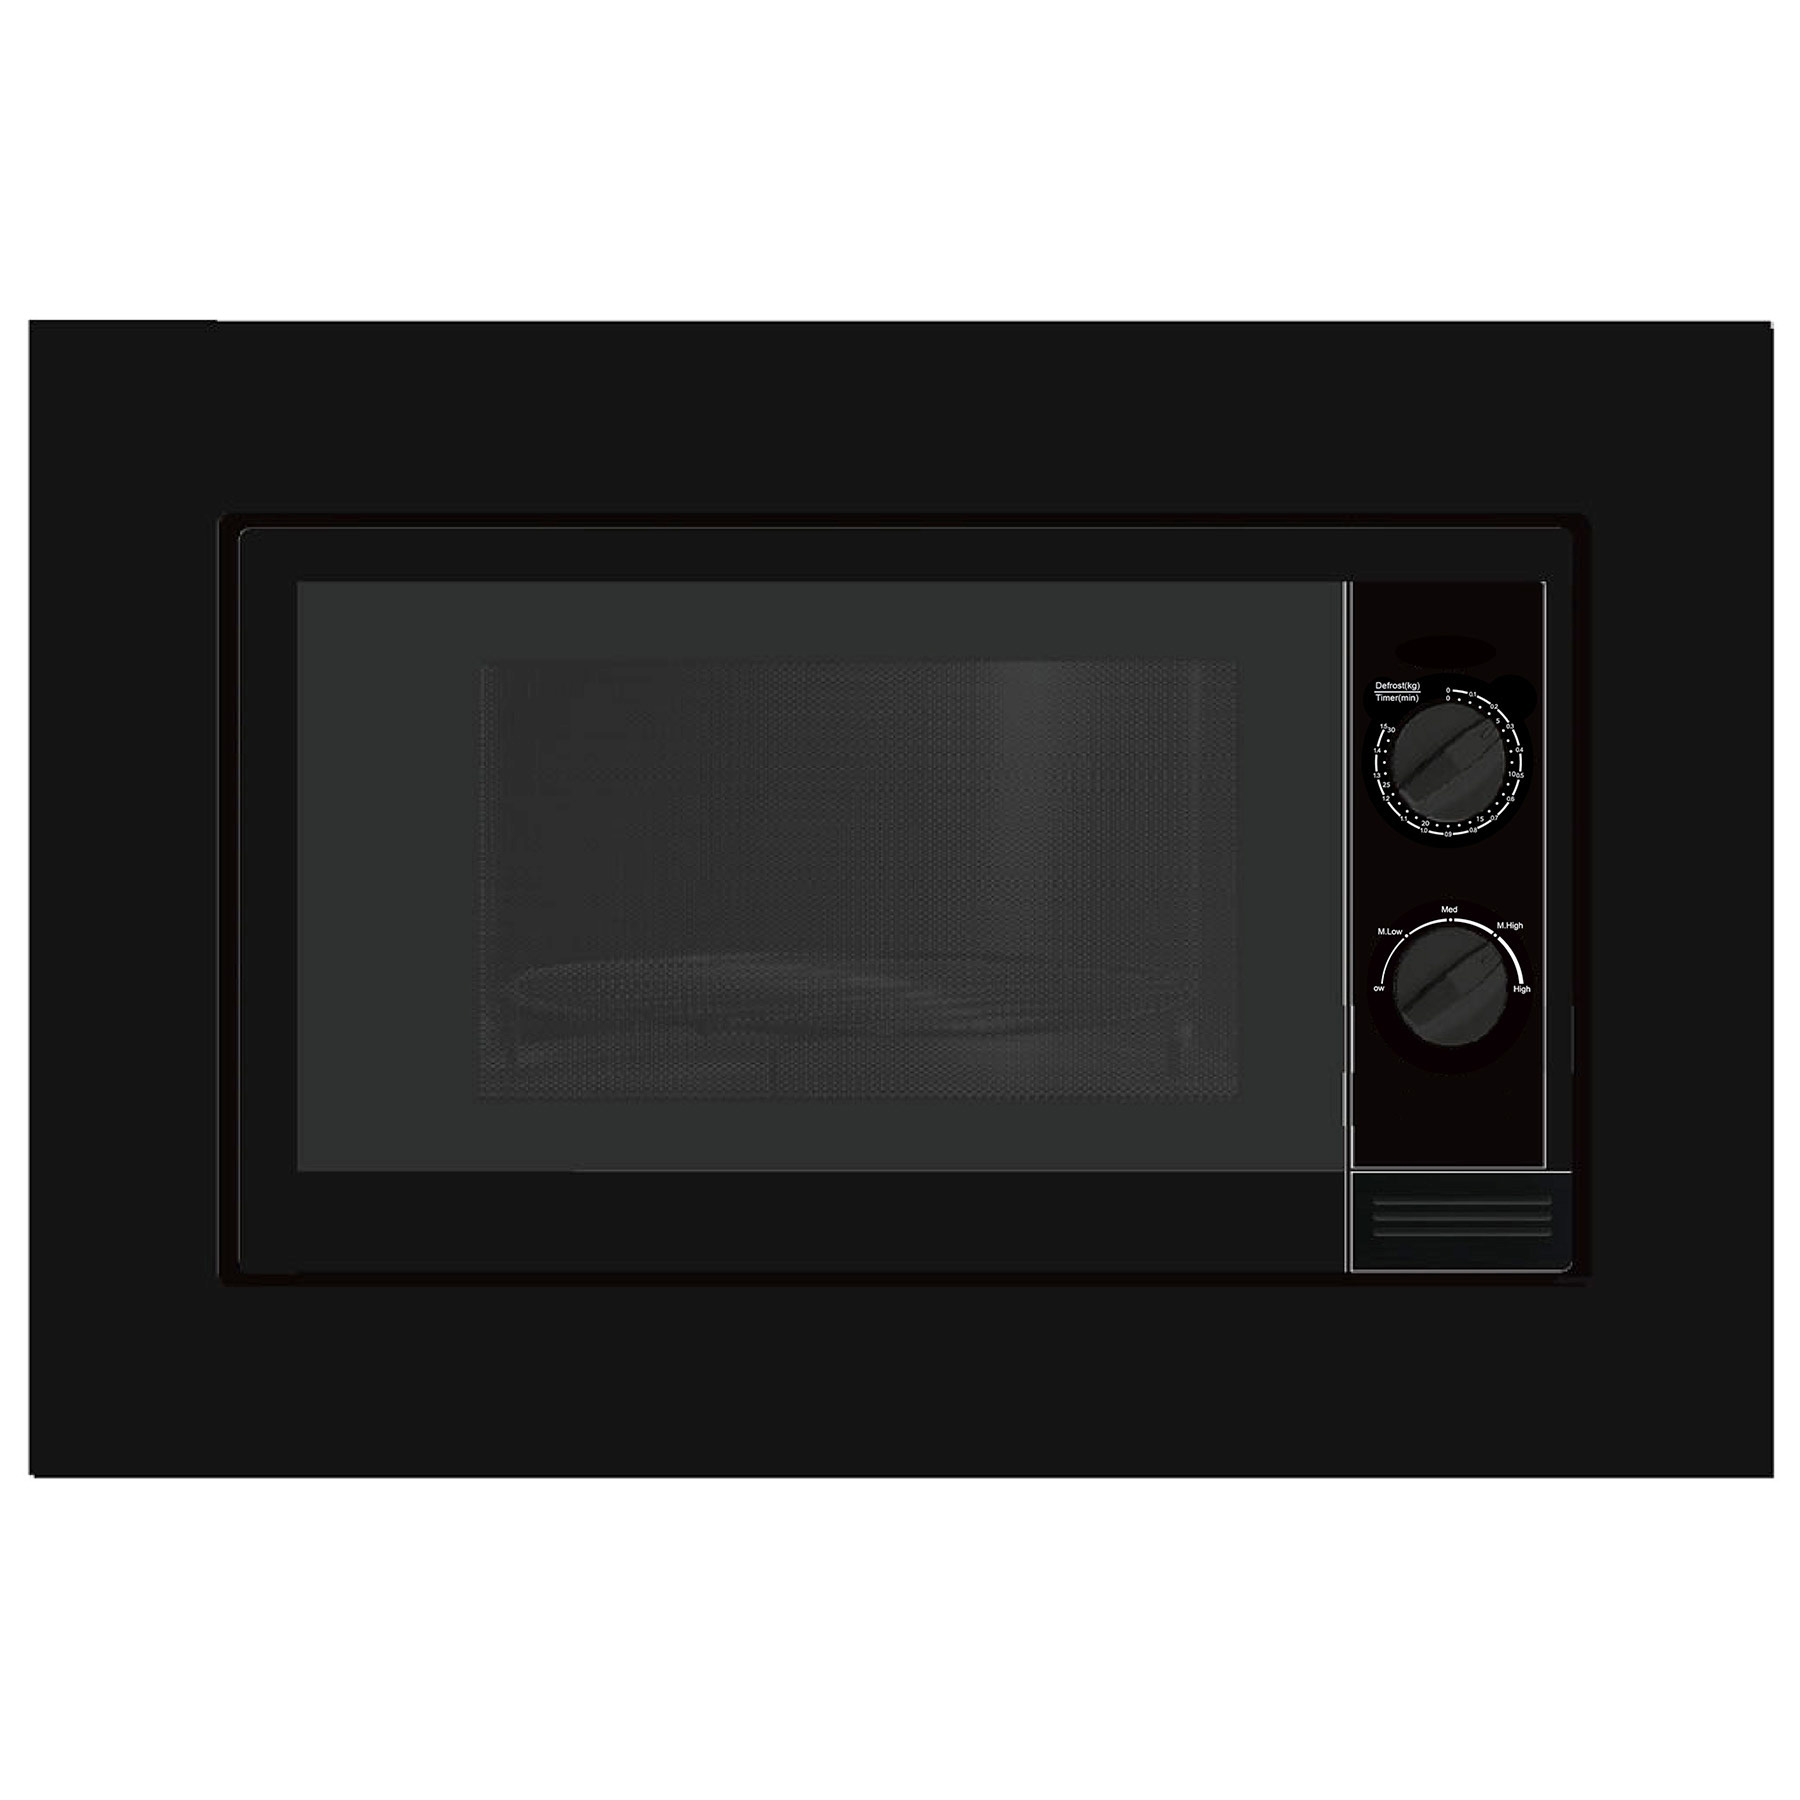 Culina UBMICRO20BK Built In Slim Depth Microwave Oven in Black 700W 20